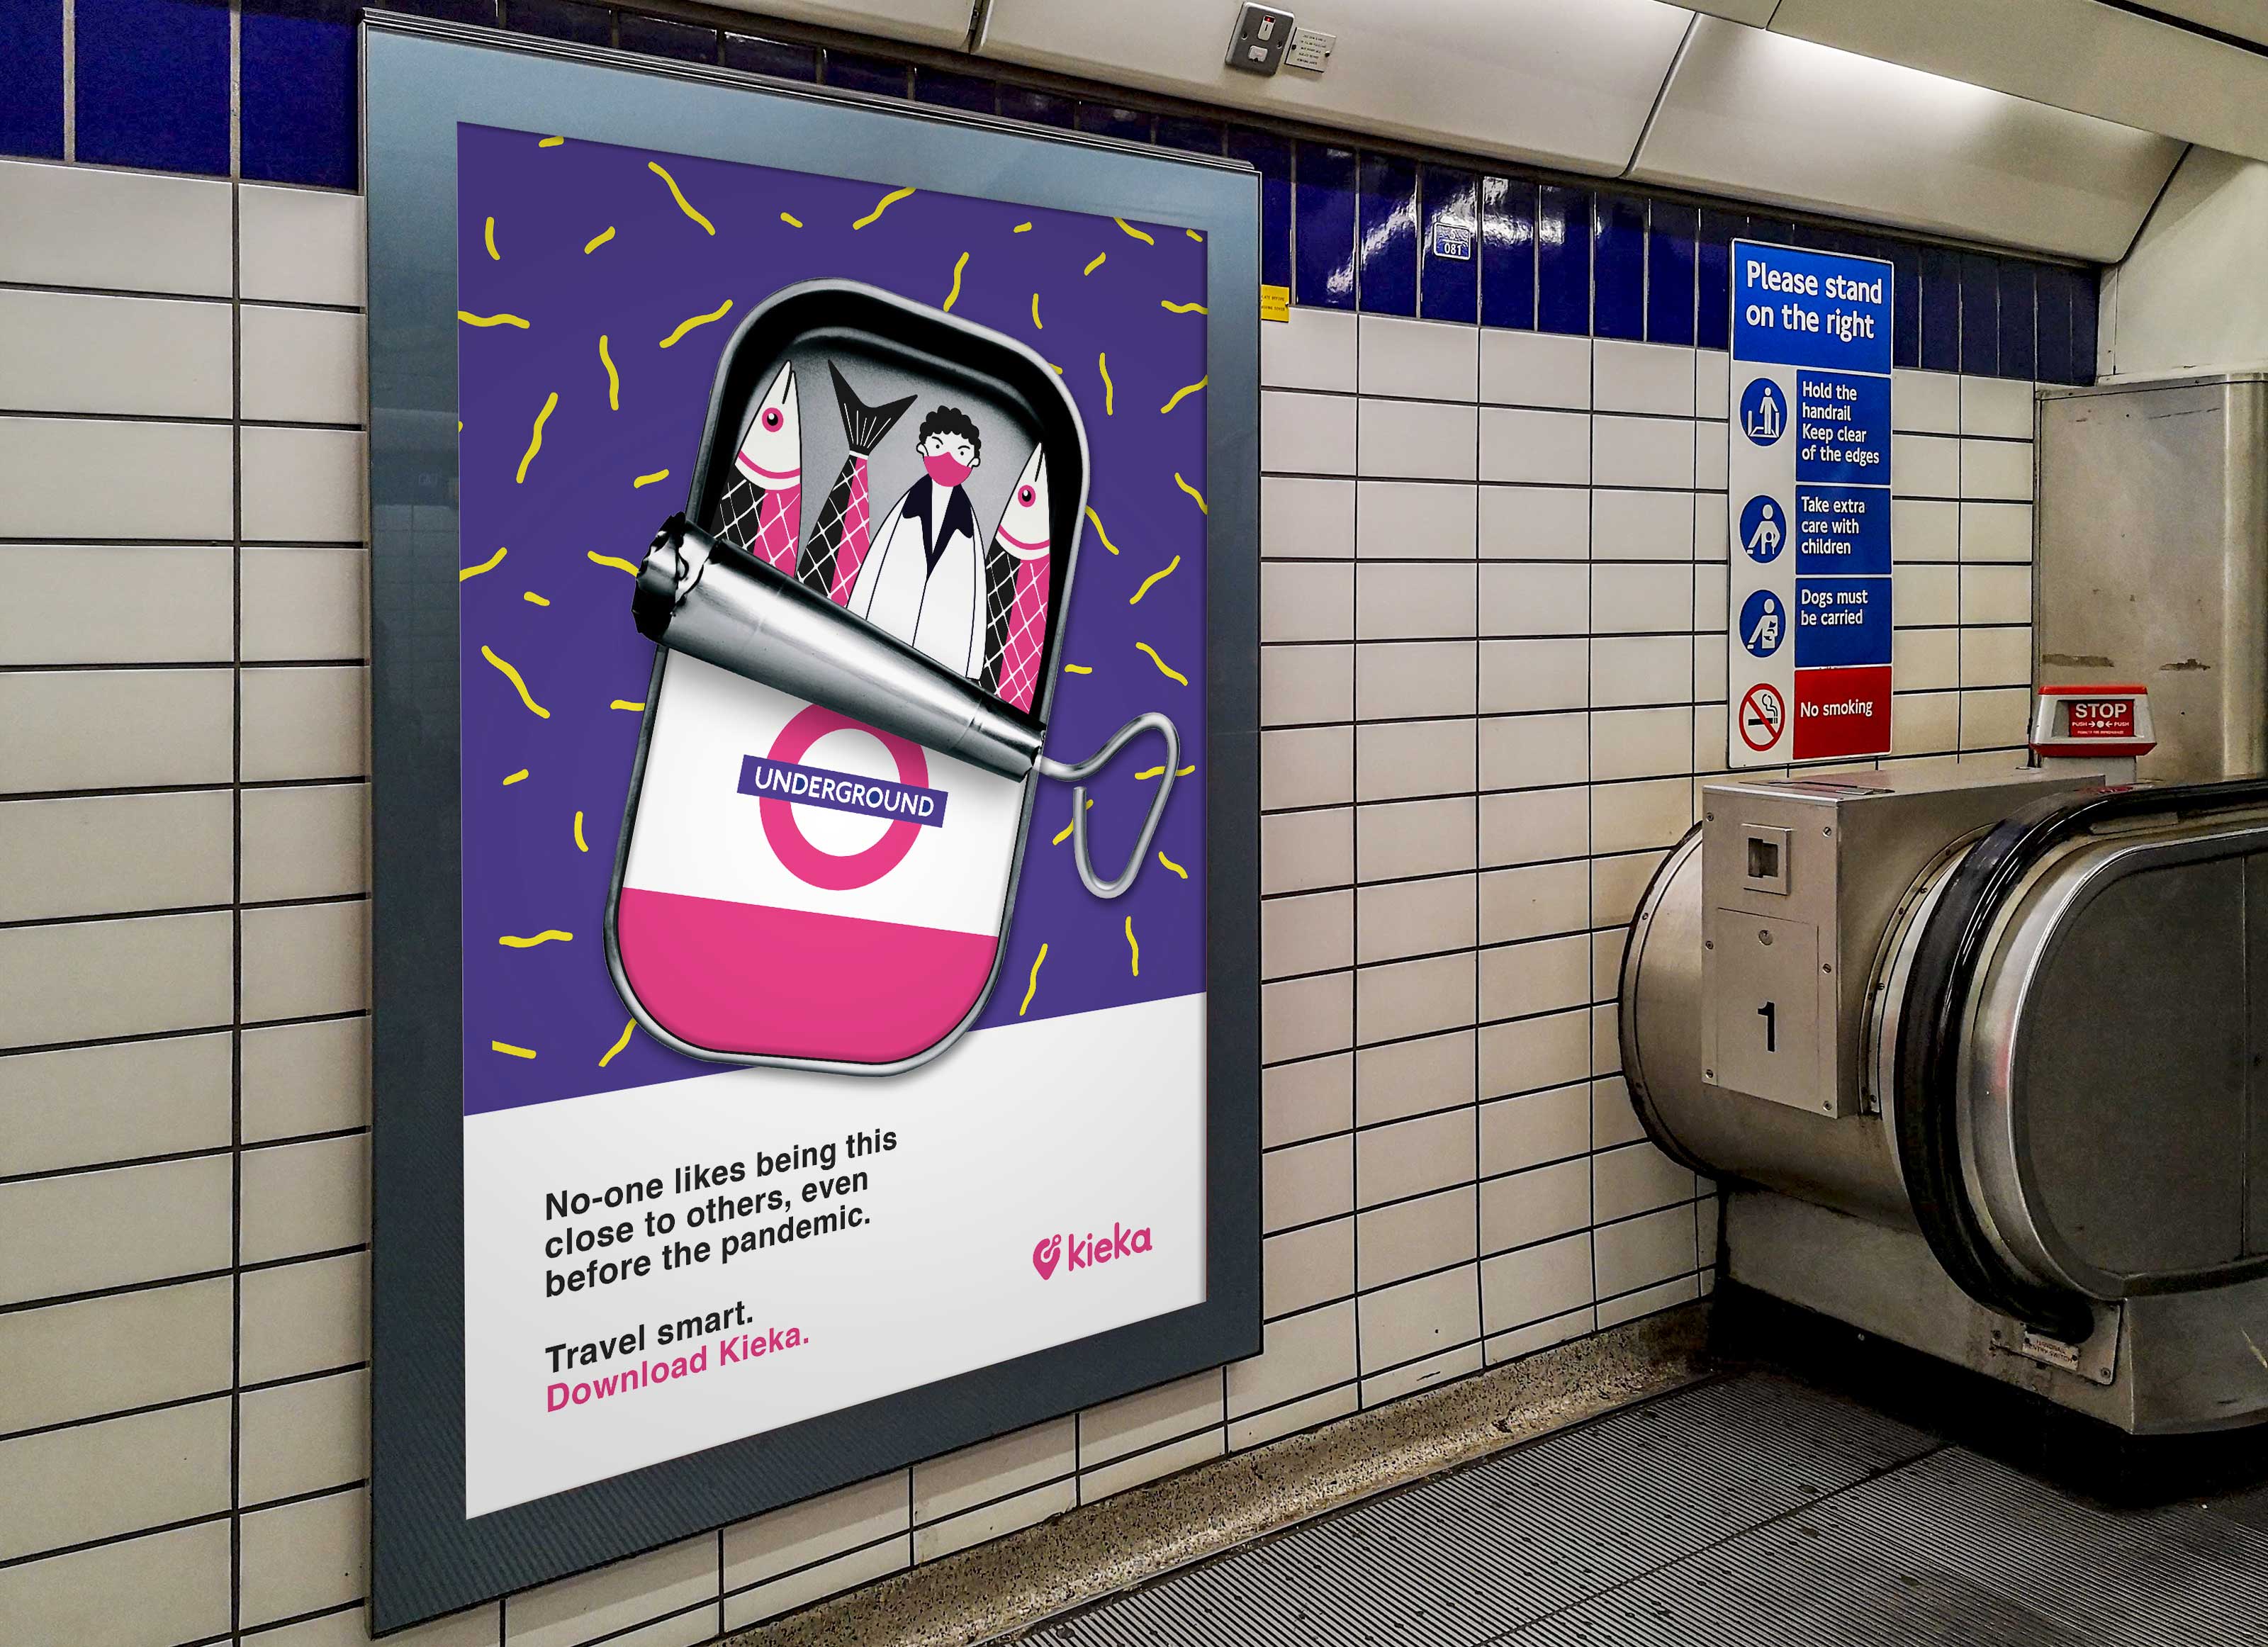 Mockup advertisement in tube station